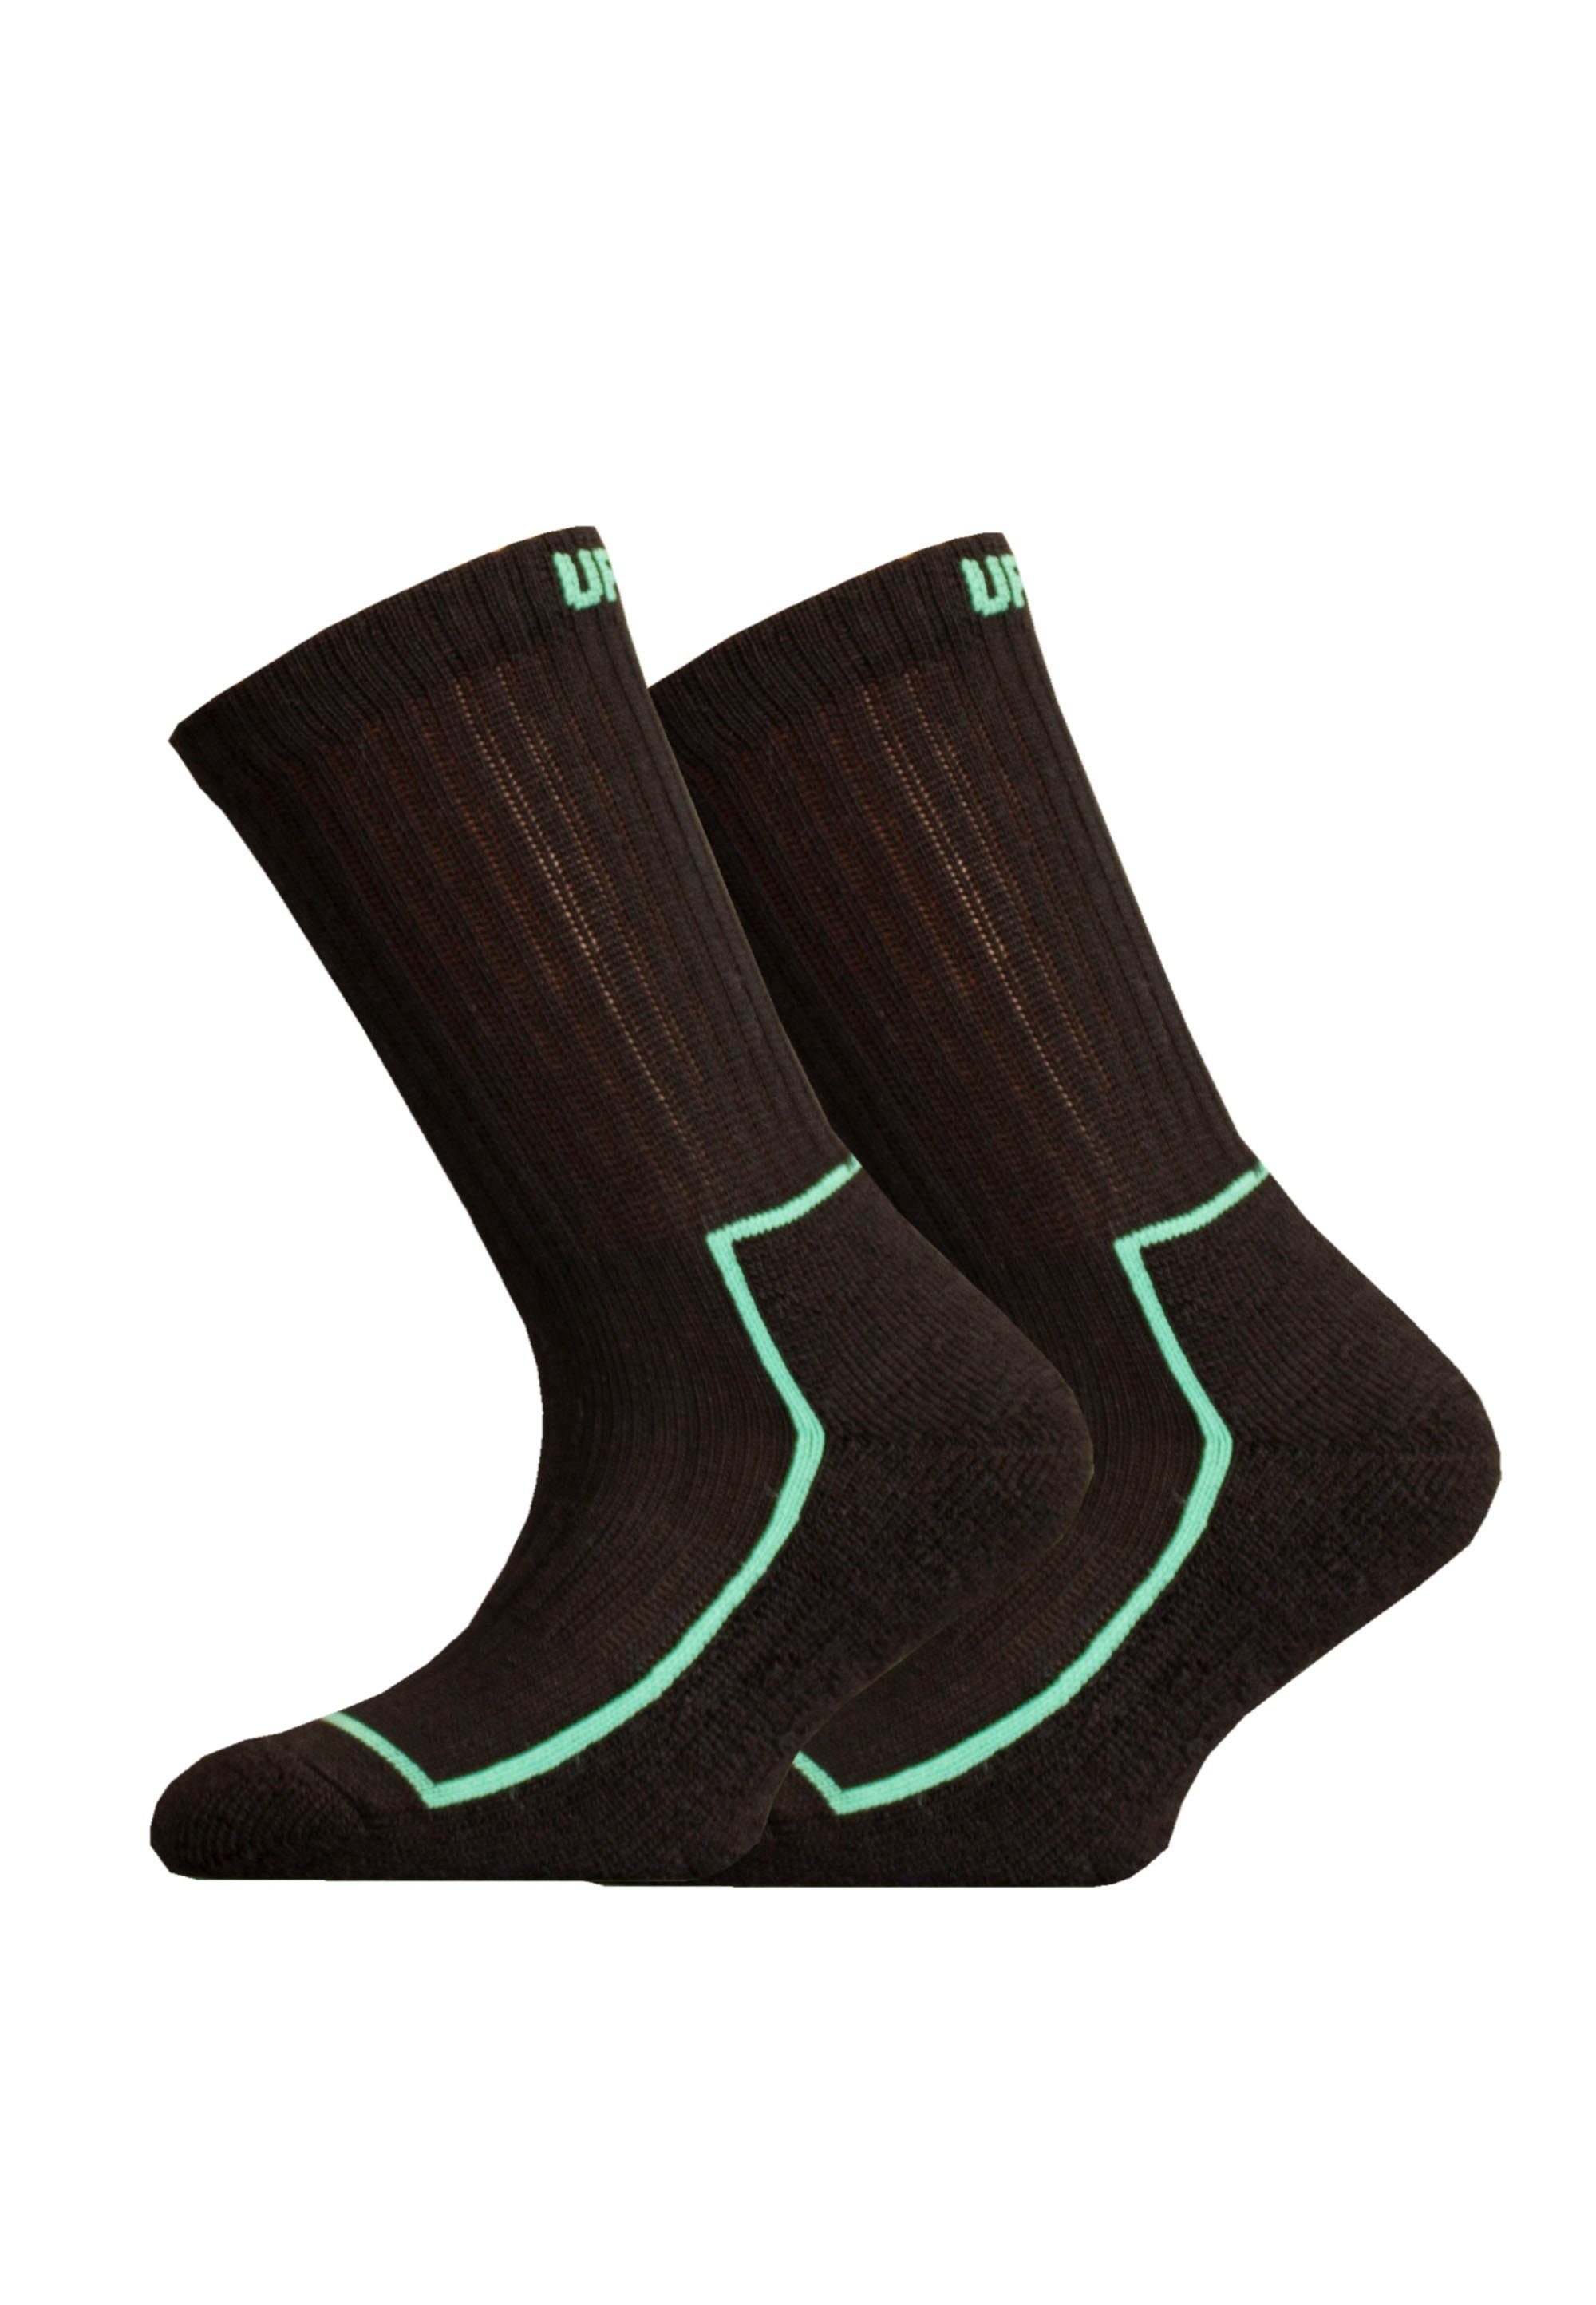 UphillSport Socken SAANA JR 2er mit Flextech-Struktur Pack (2-Paar) schwarz